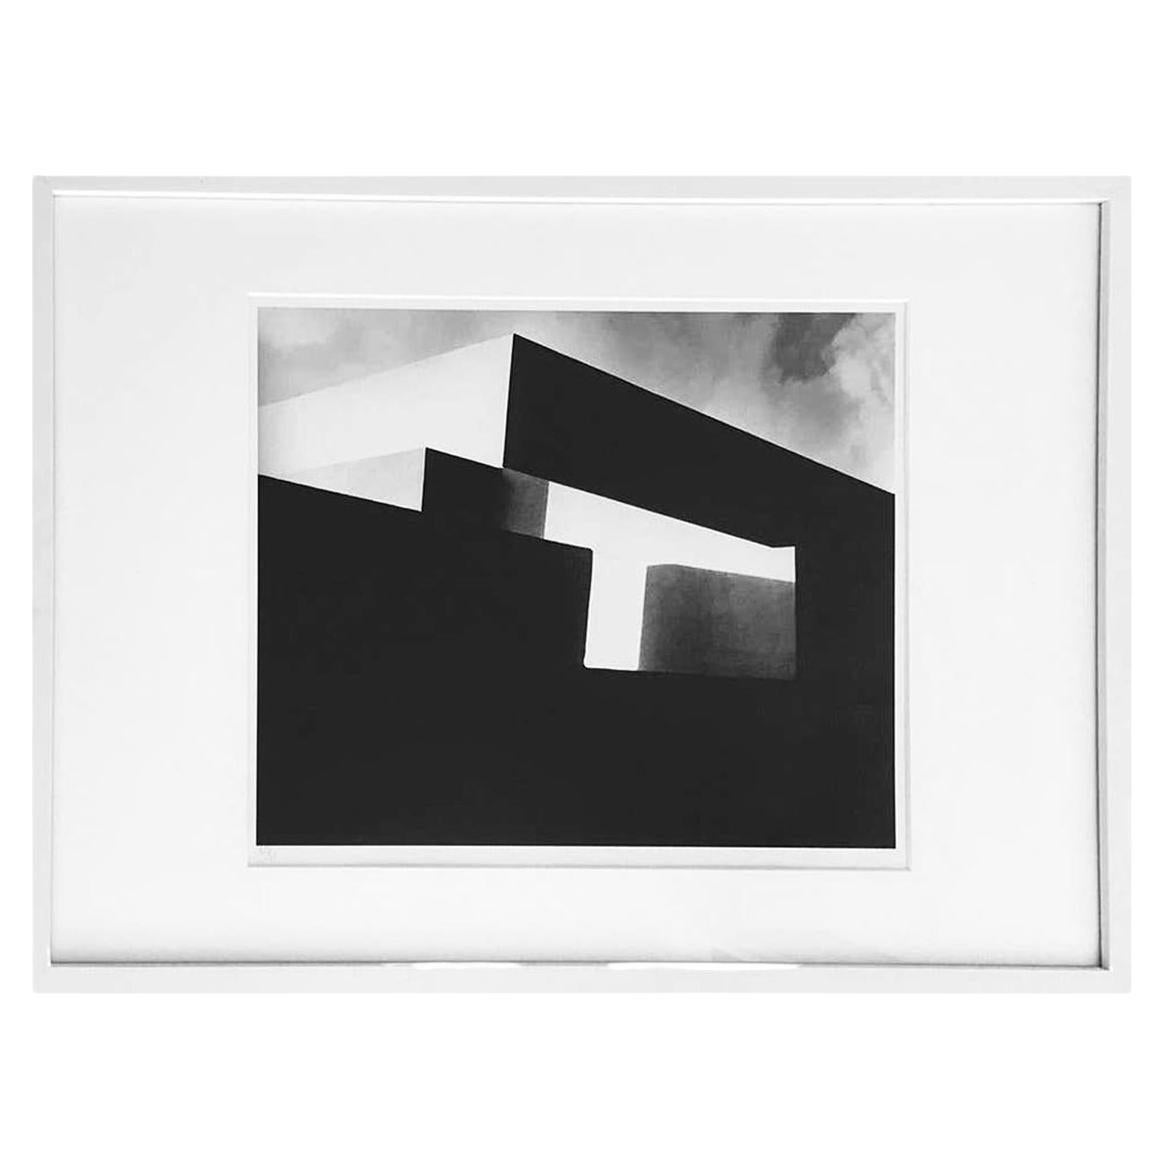 Staring into Space, Mondrian. Black and white architectural landscape photograph - Photograph by Leo Matiz